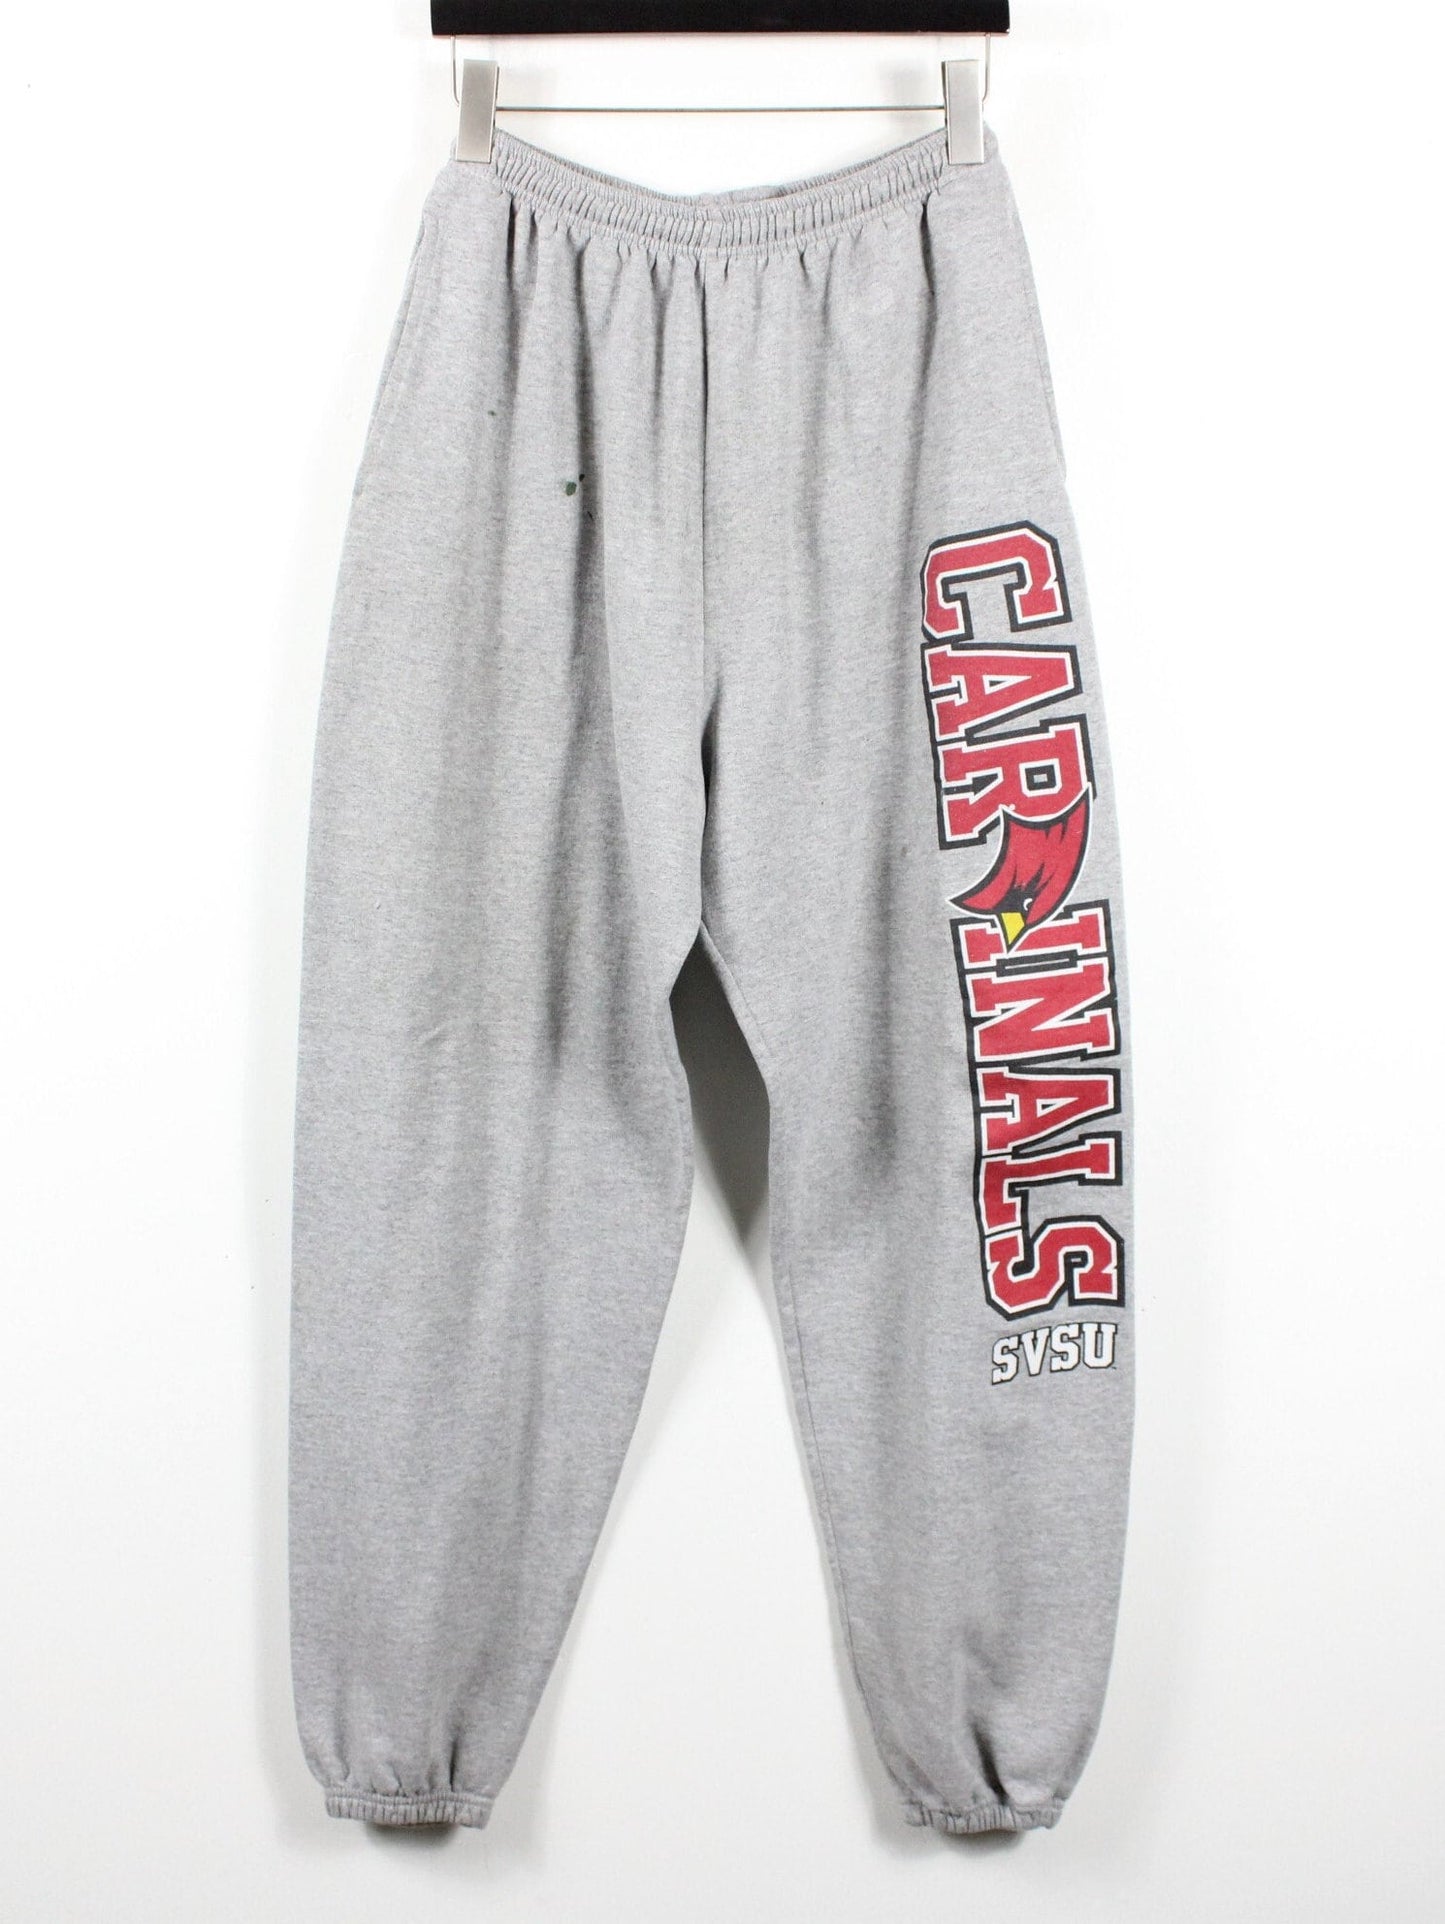 Arizona-Cardinals Pants / Vintage NFL Champion Sweatpants Windbreaker Tearaways Style Joggers / 90s Streetwear / Hip Hop Clothing